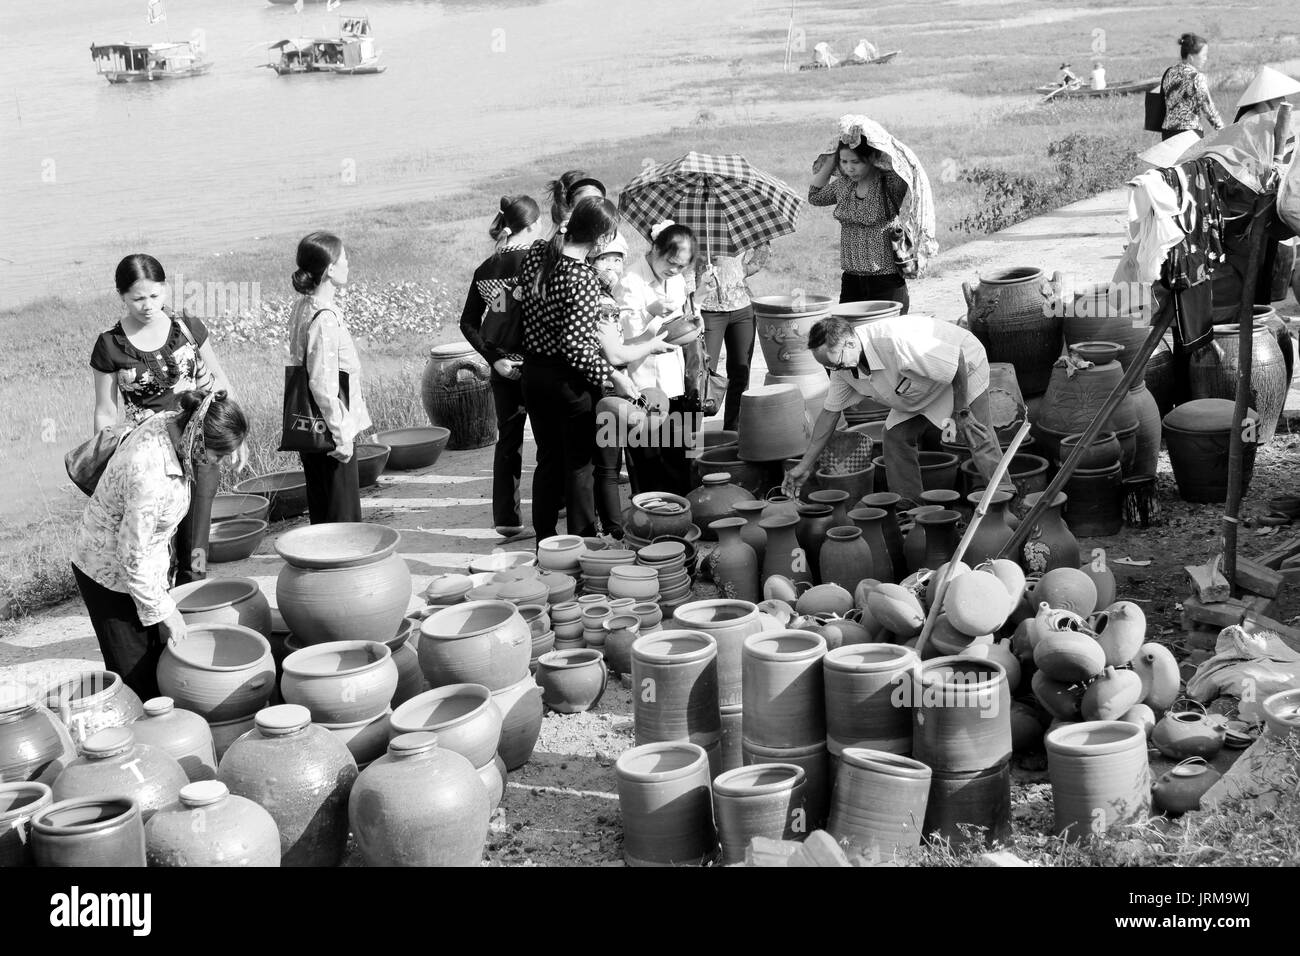 ceramics markets in Vietnam Stock Photo